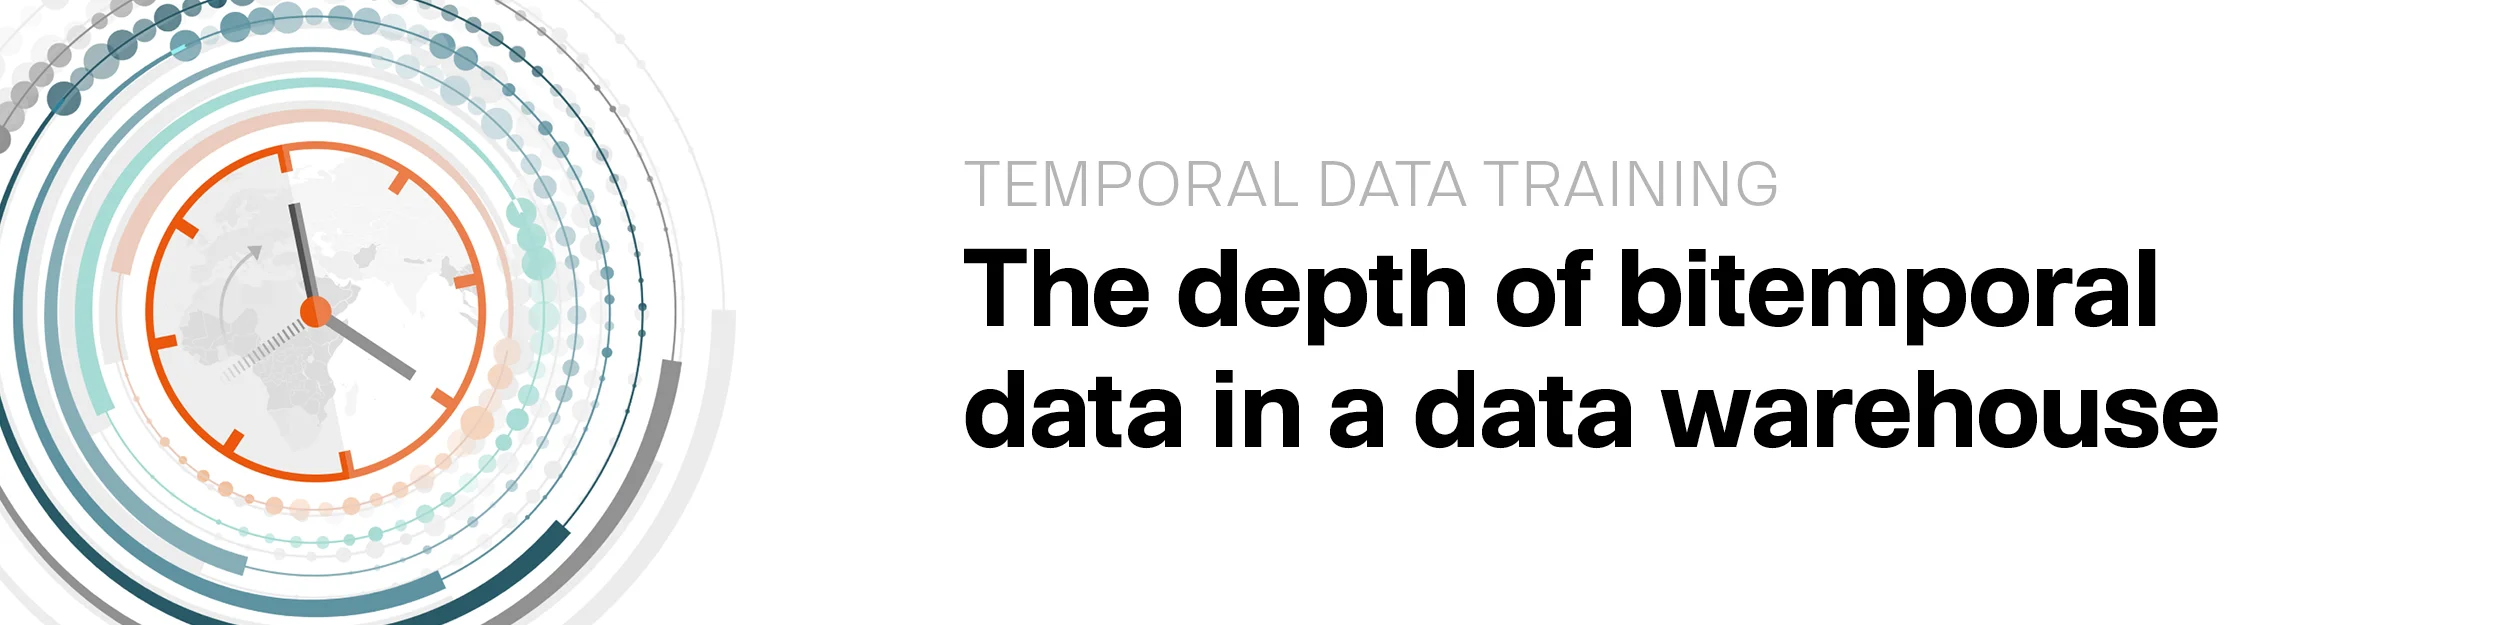 TEDAMOH - The depth of bitemporal data